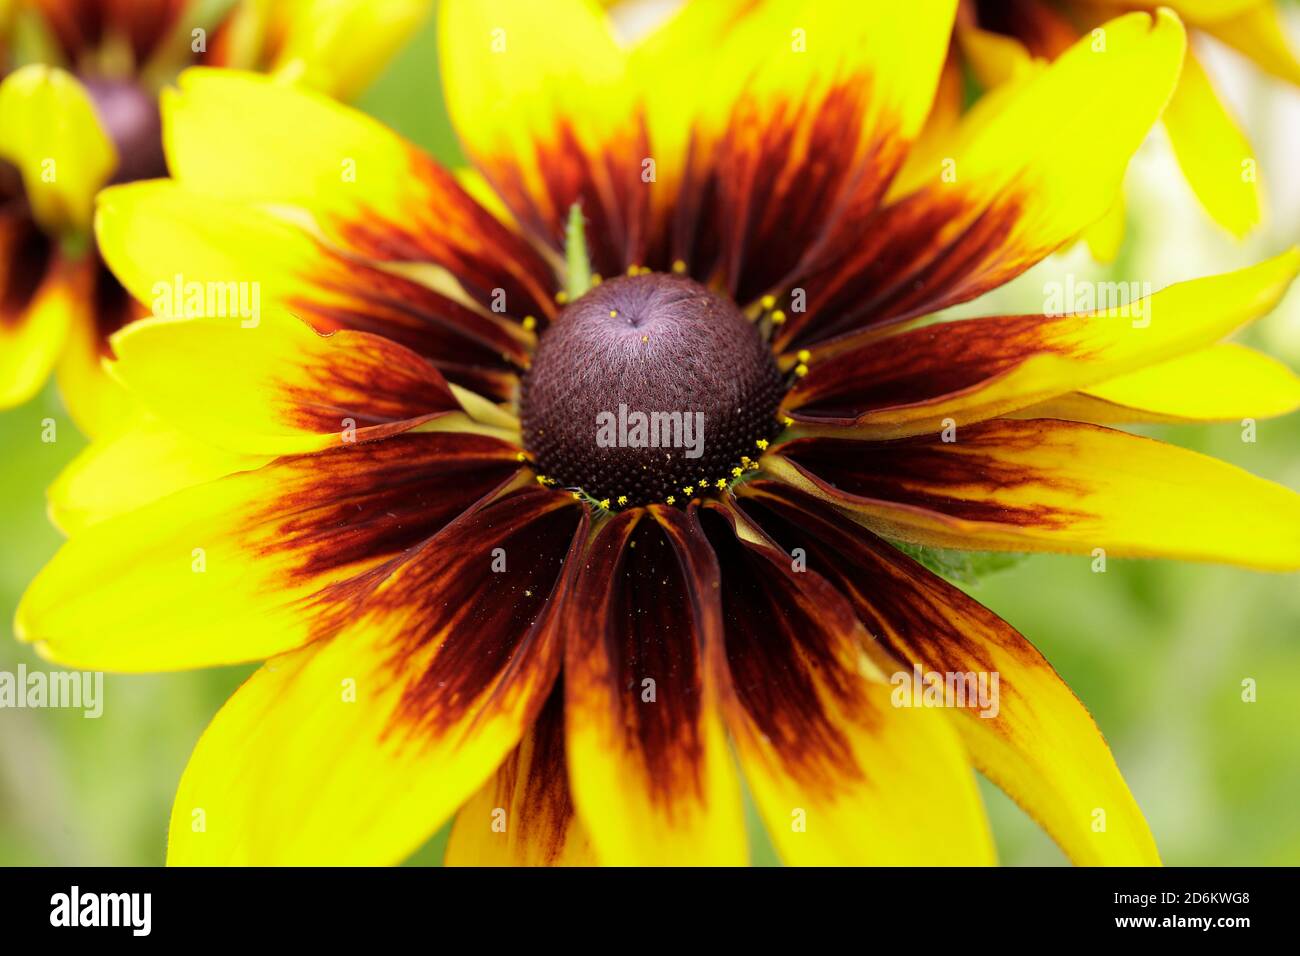 Rudbeckia hirta 'Rustic Dwarf'. Coneflowers exposés dans un jardin à la fin de l'été. ROYAUME-UNI Banque D'Images